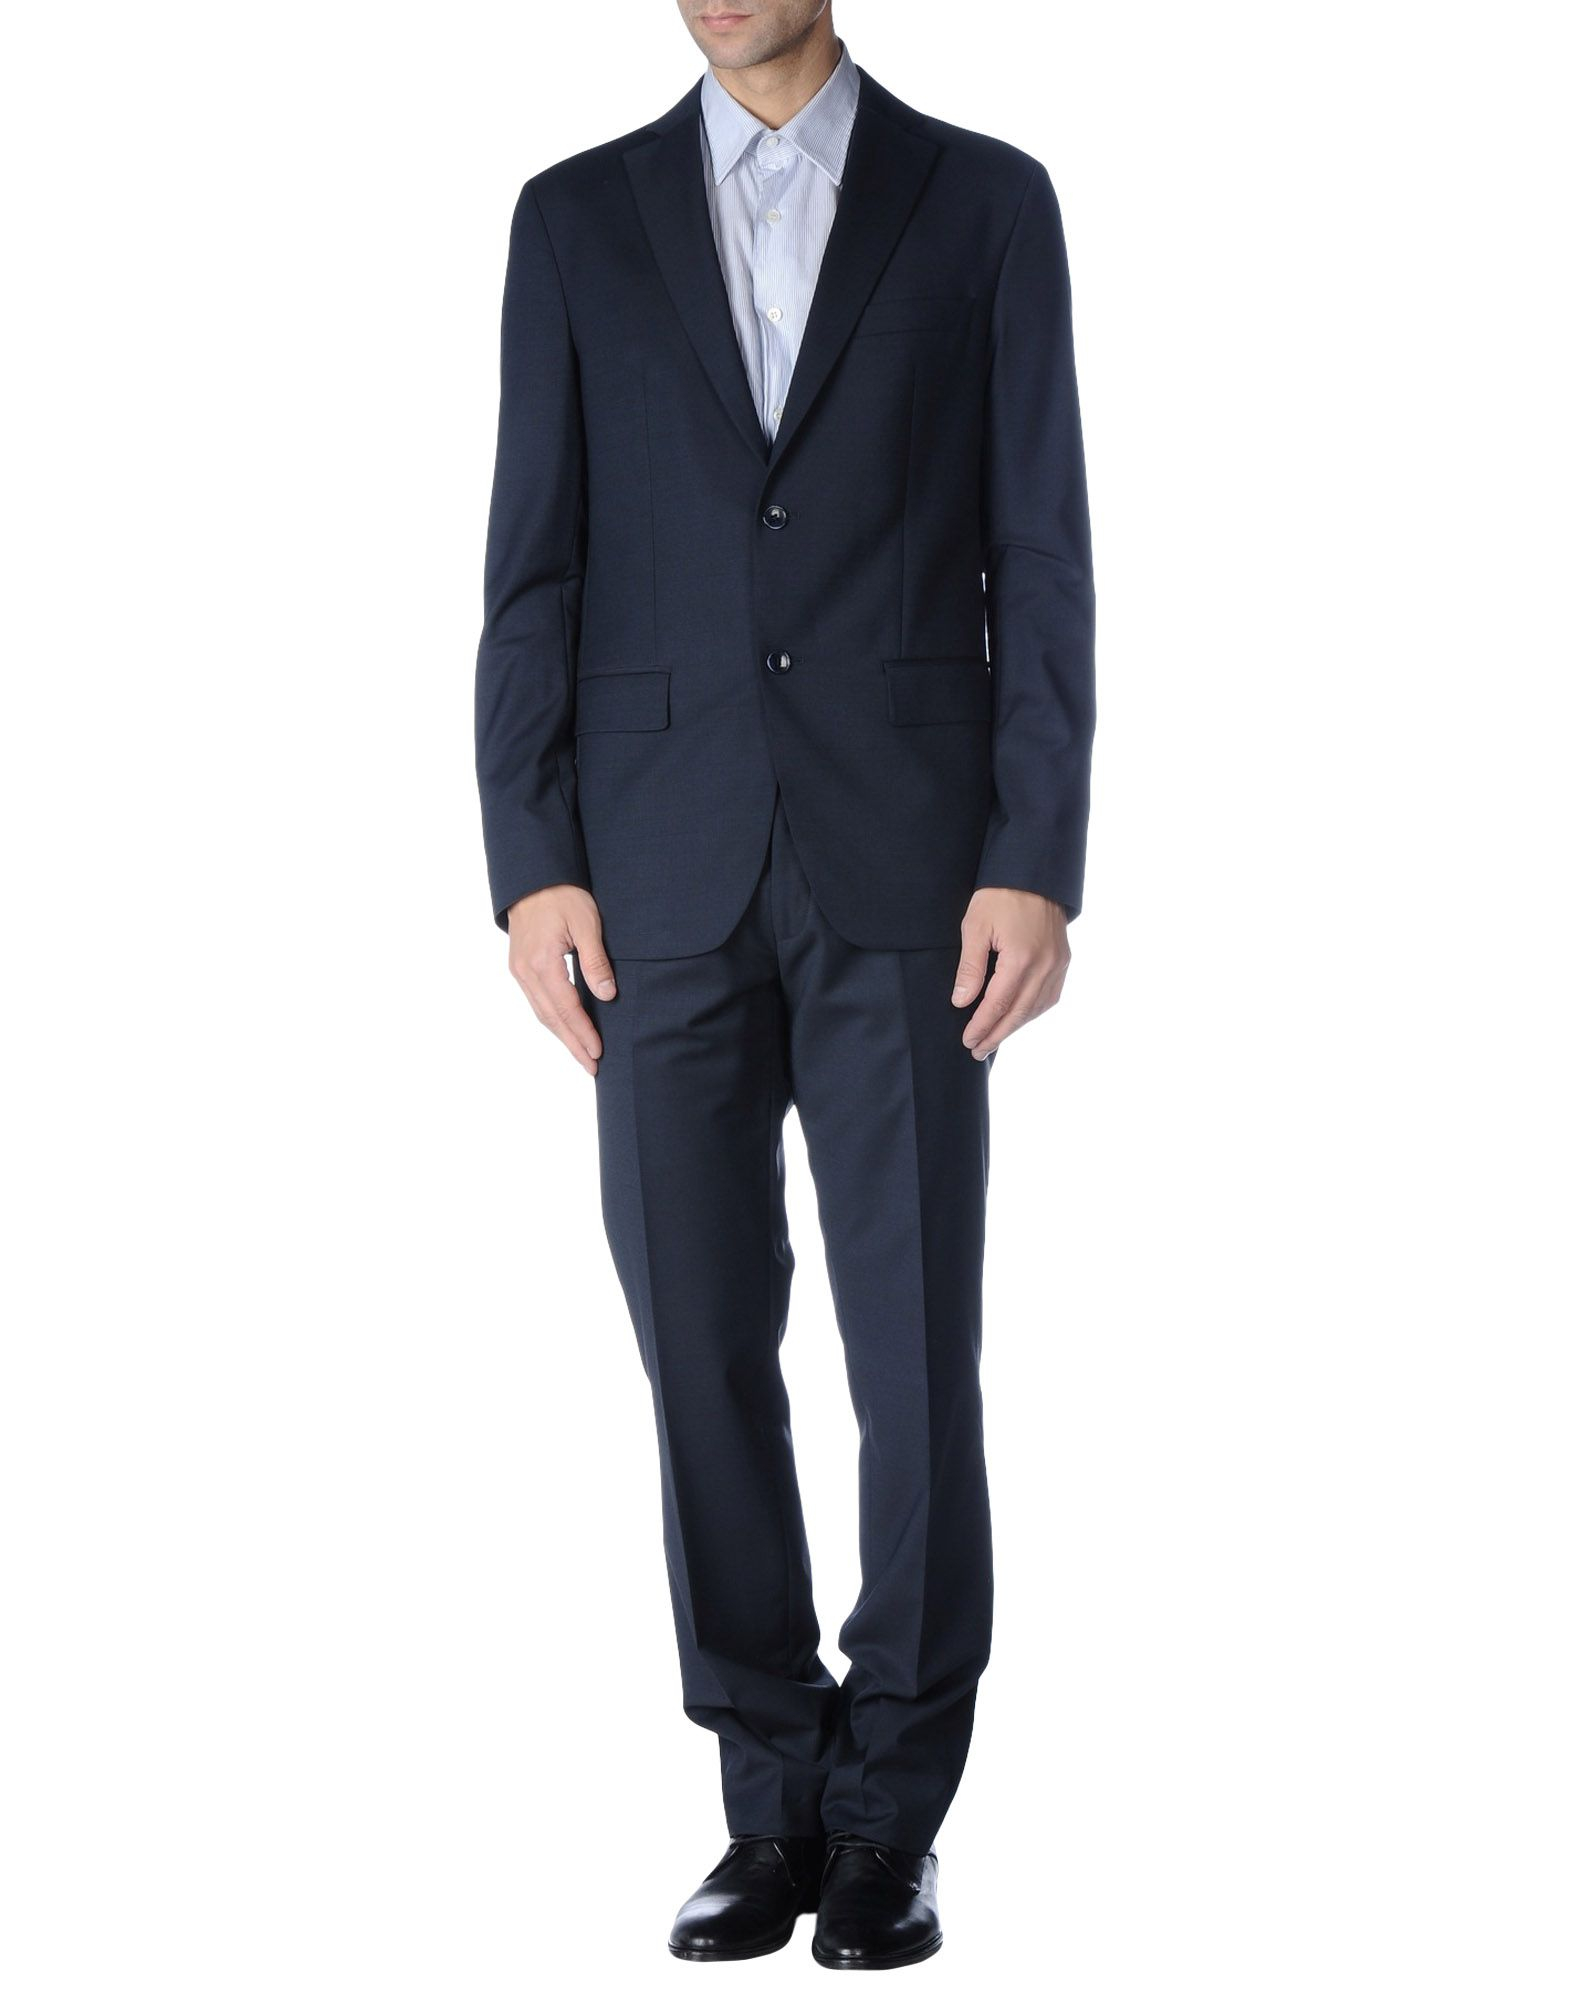 Lyst - Class Roberto Cavalli Suit in Blue for Men